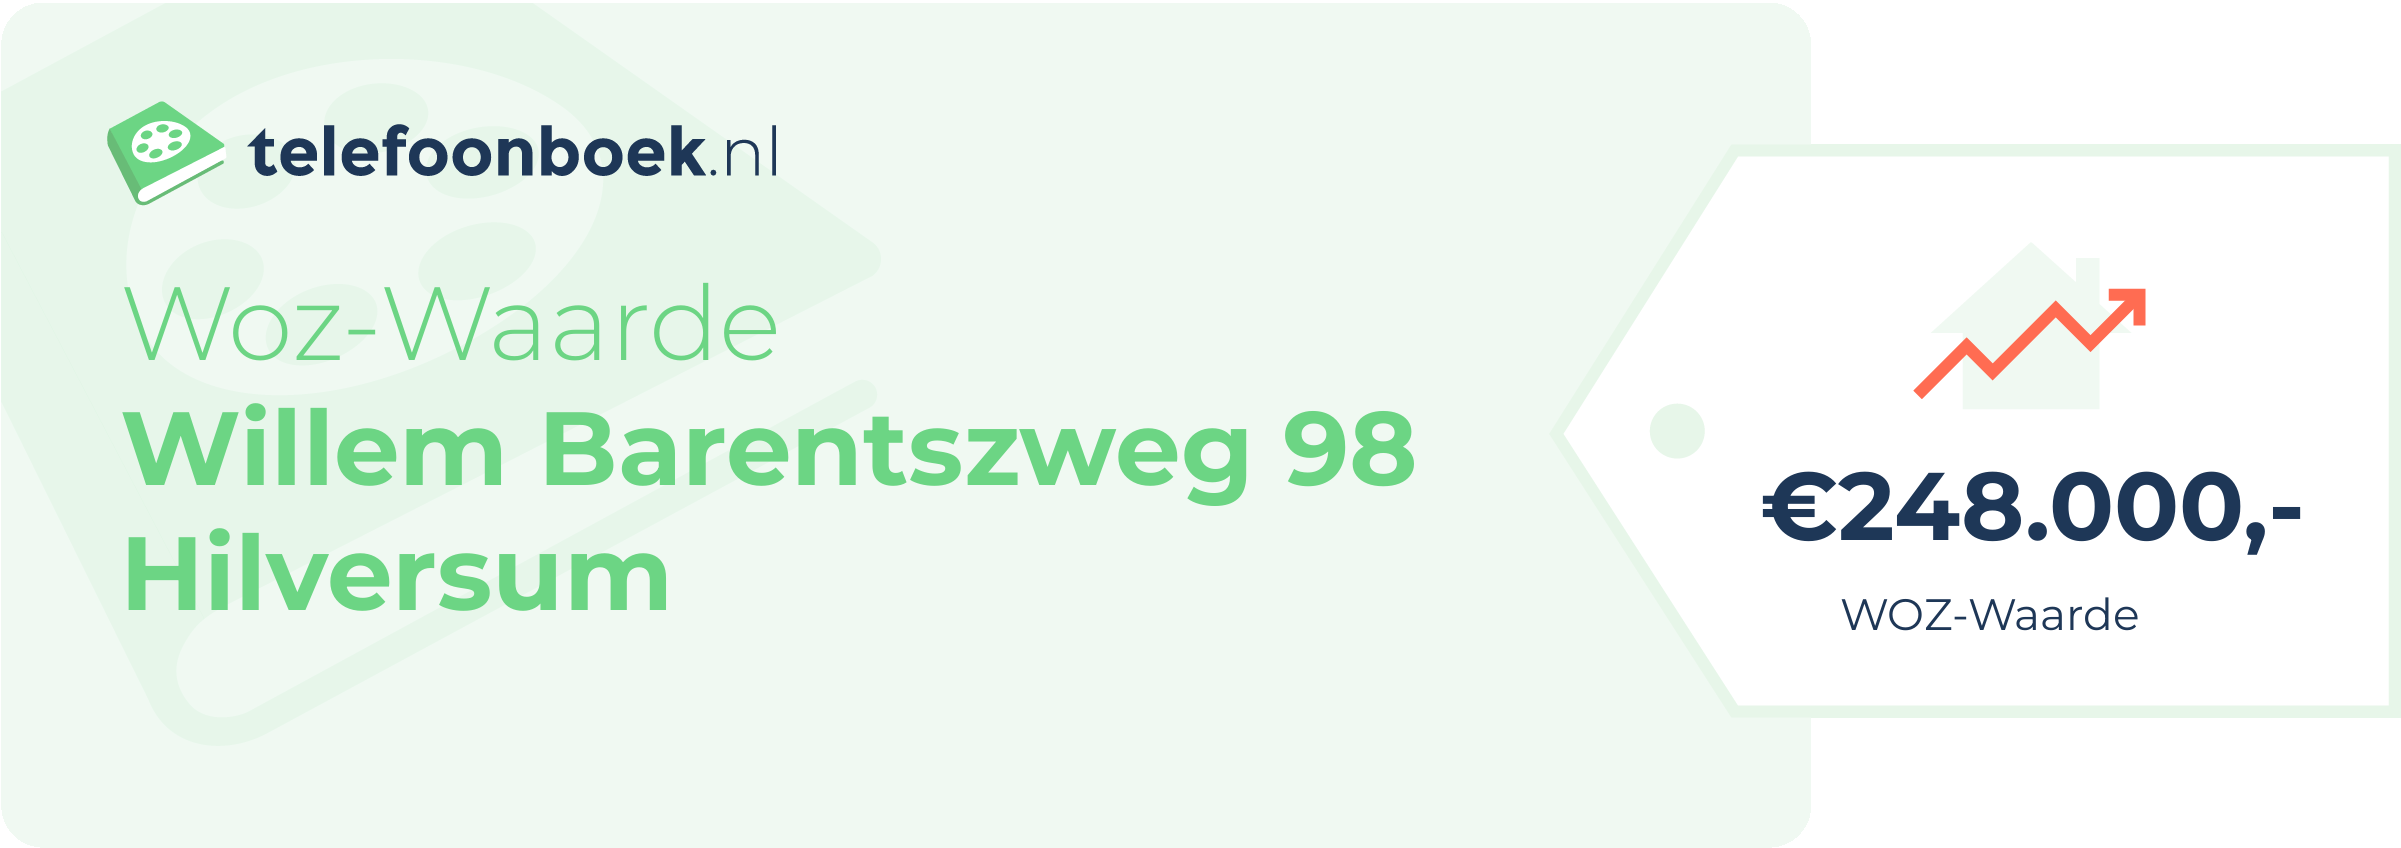 WOZ-waarde Willem Barentszweg 98 Hilversum